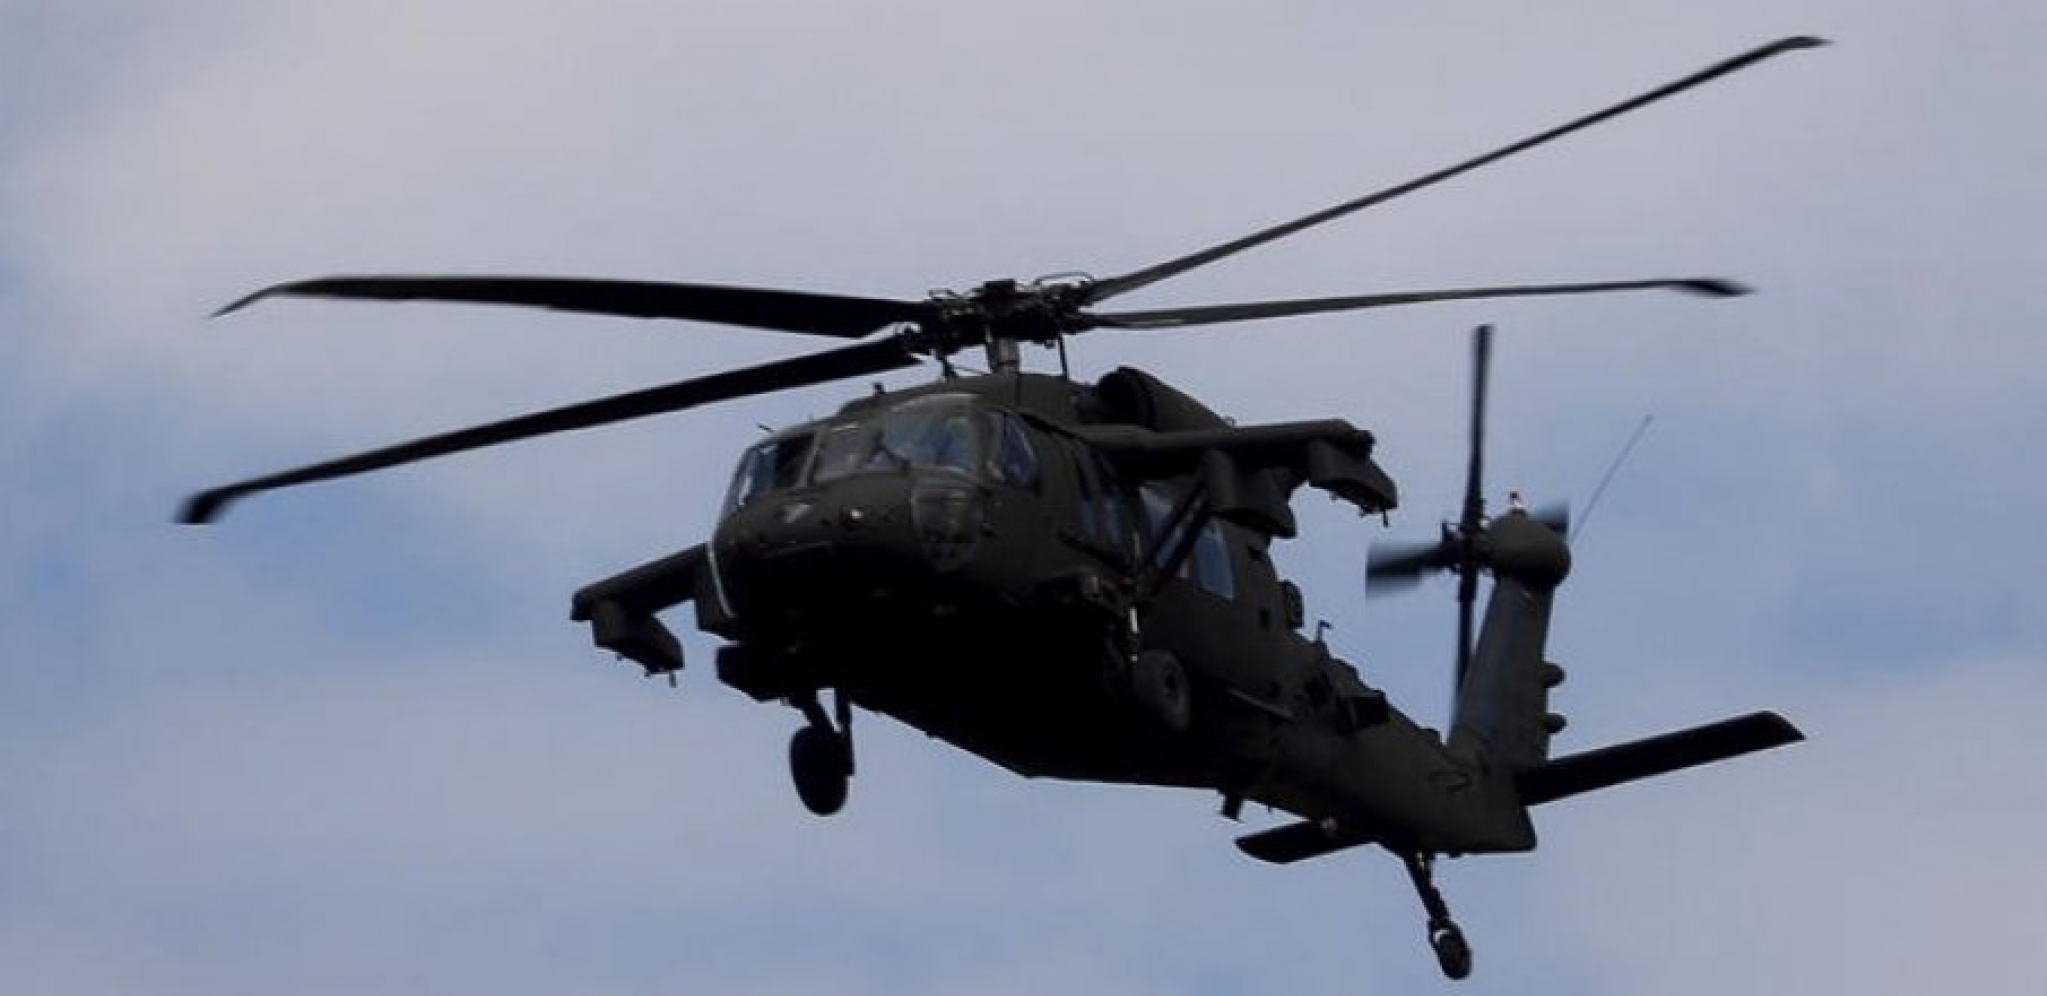 PAO "CRNI SOKO" Helikopterska nesreća, troje nastradalih (FOTO/VIDEO)